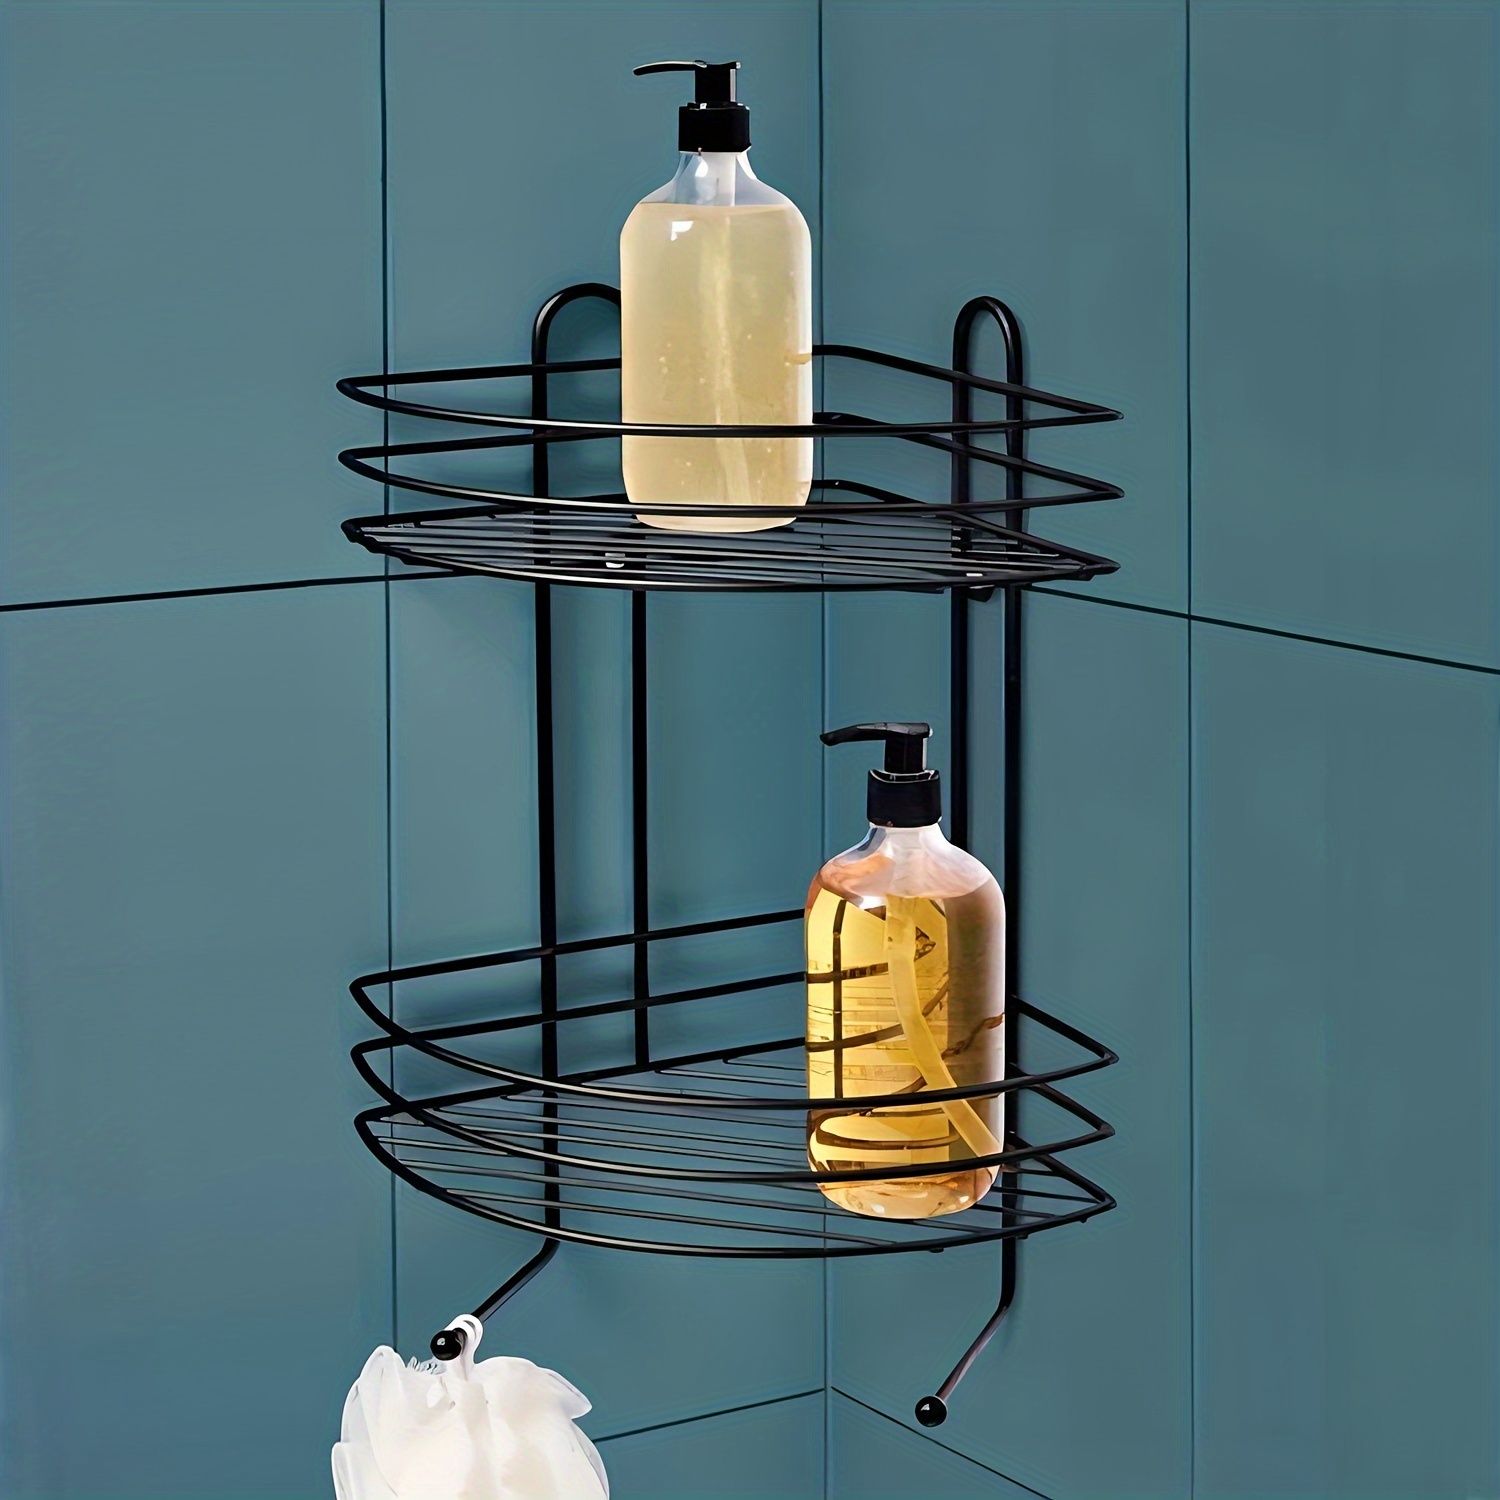 Corner Shower Caddy Tension Pole: Adjustable Stainless Steel Shower  Organizer with 4 Tier Shelf for Bathroom Bathtub Tub Shampoo -Floor  Standing Rack